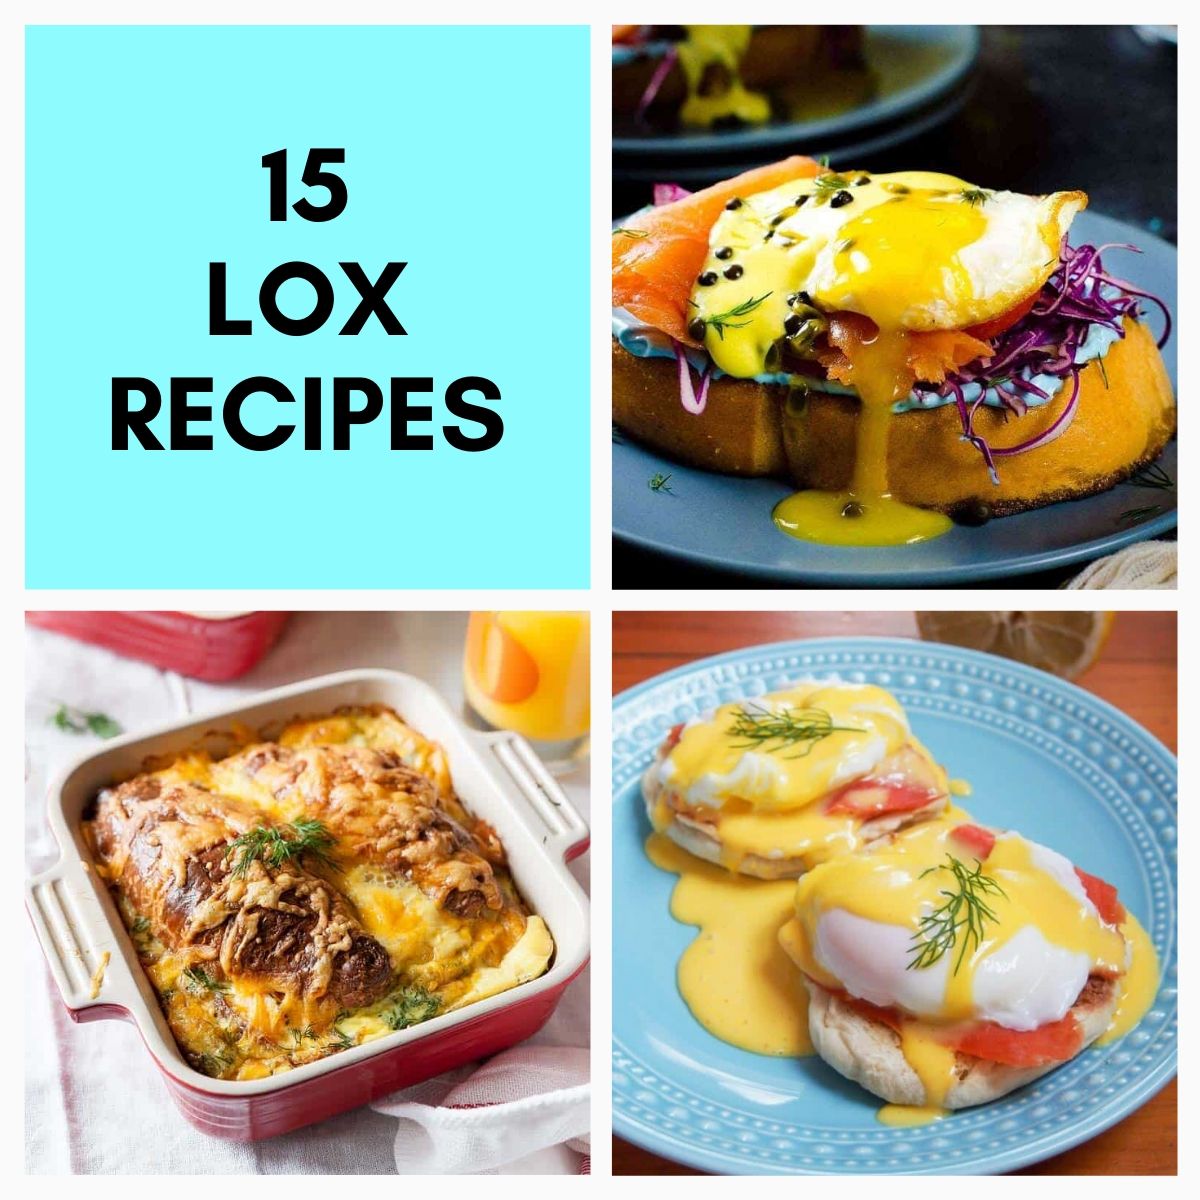 lox recipes ideas graphic